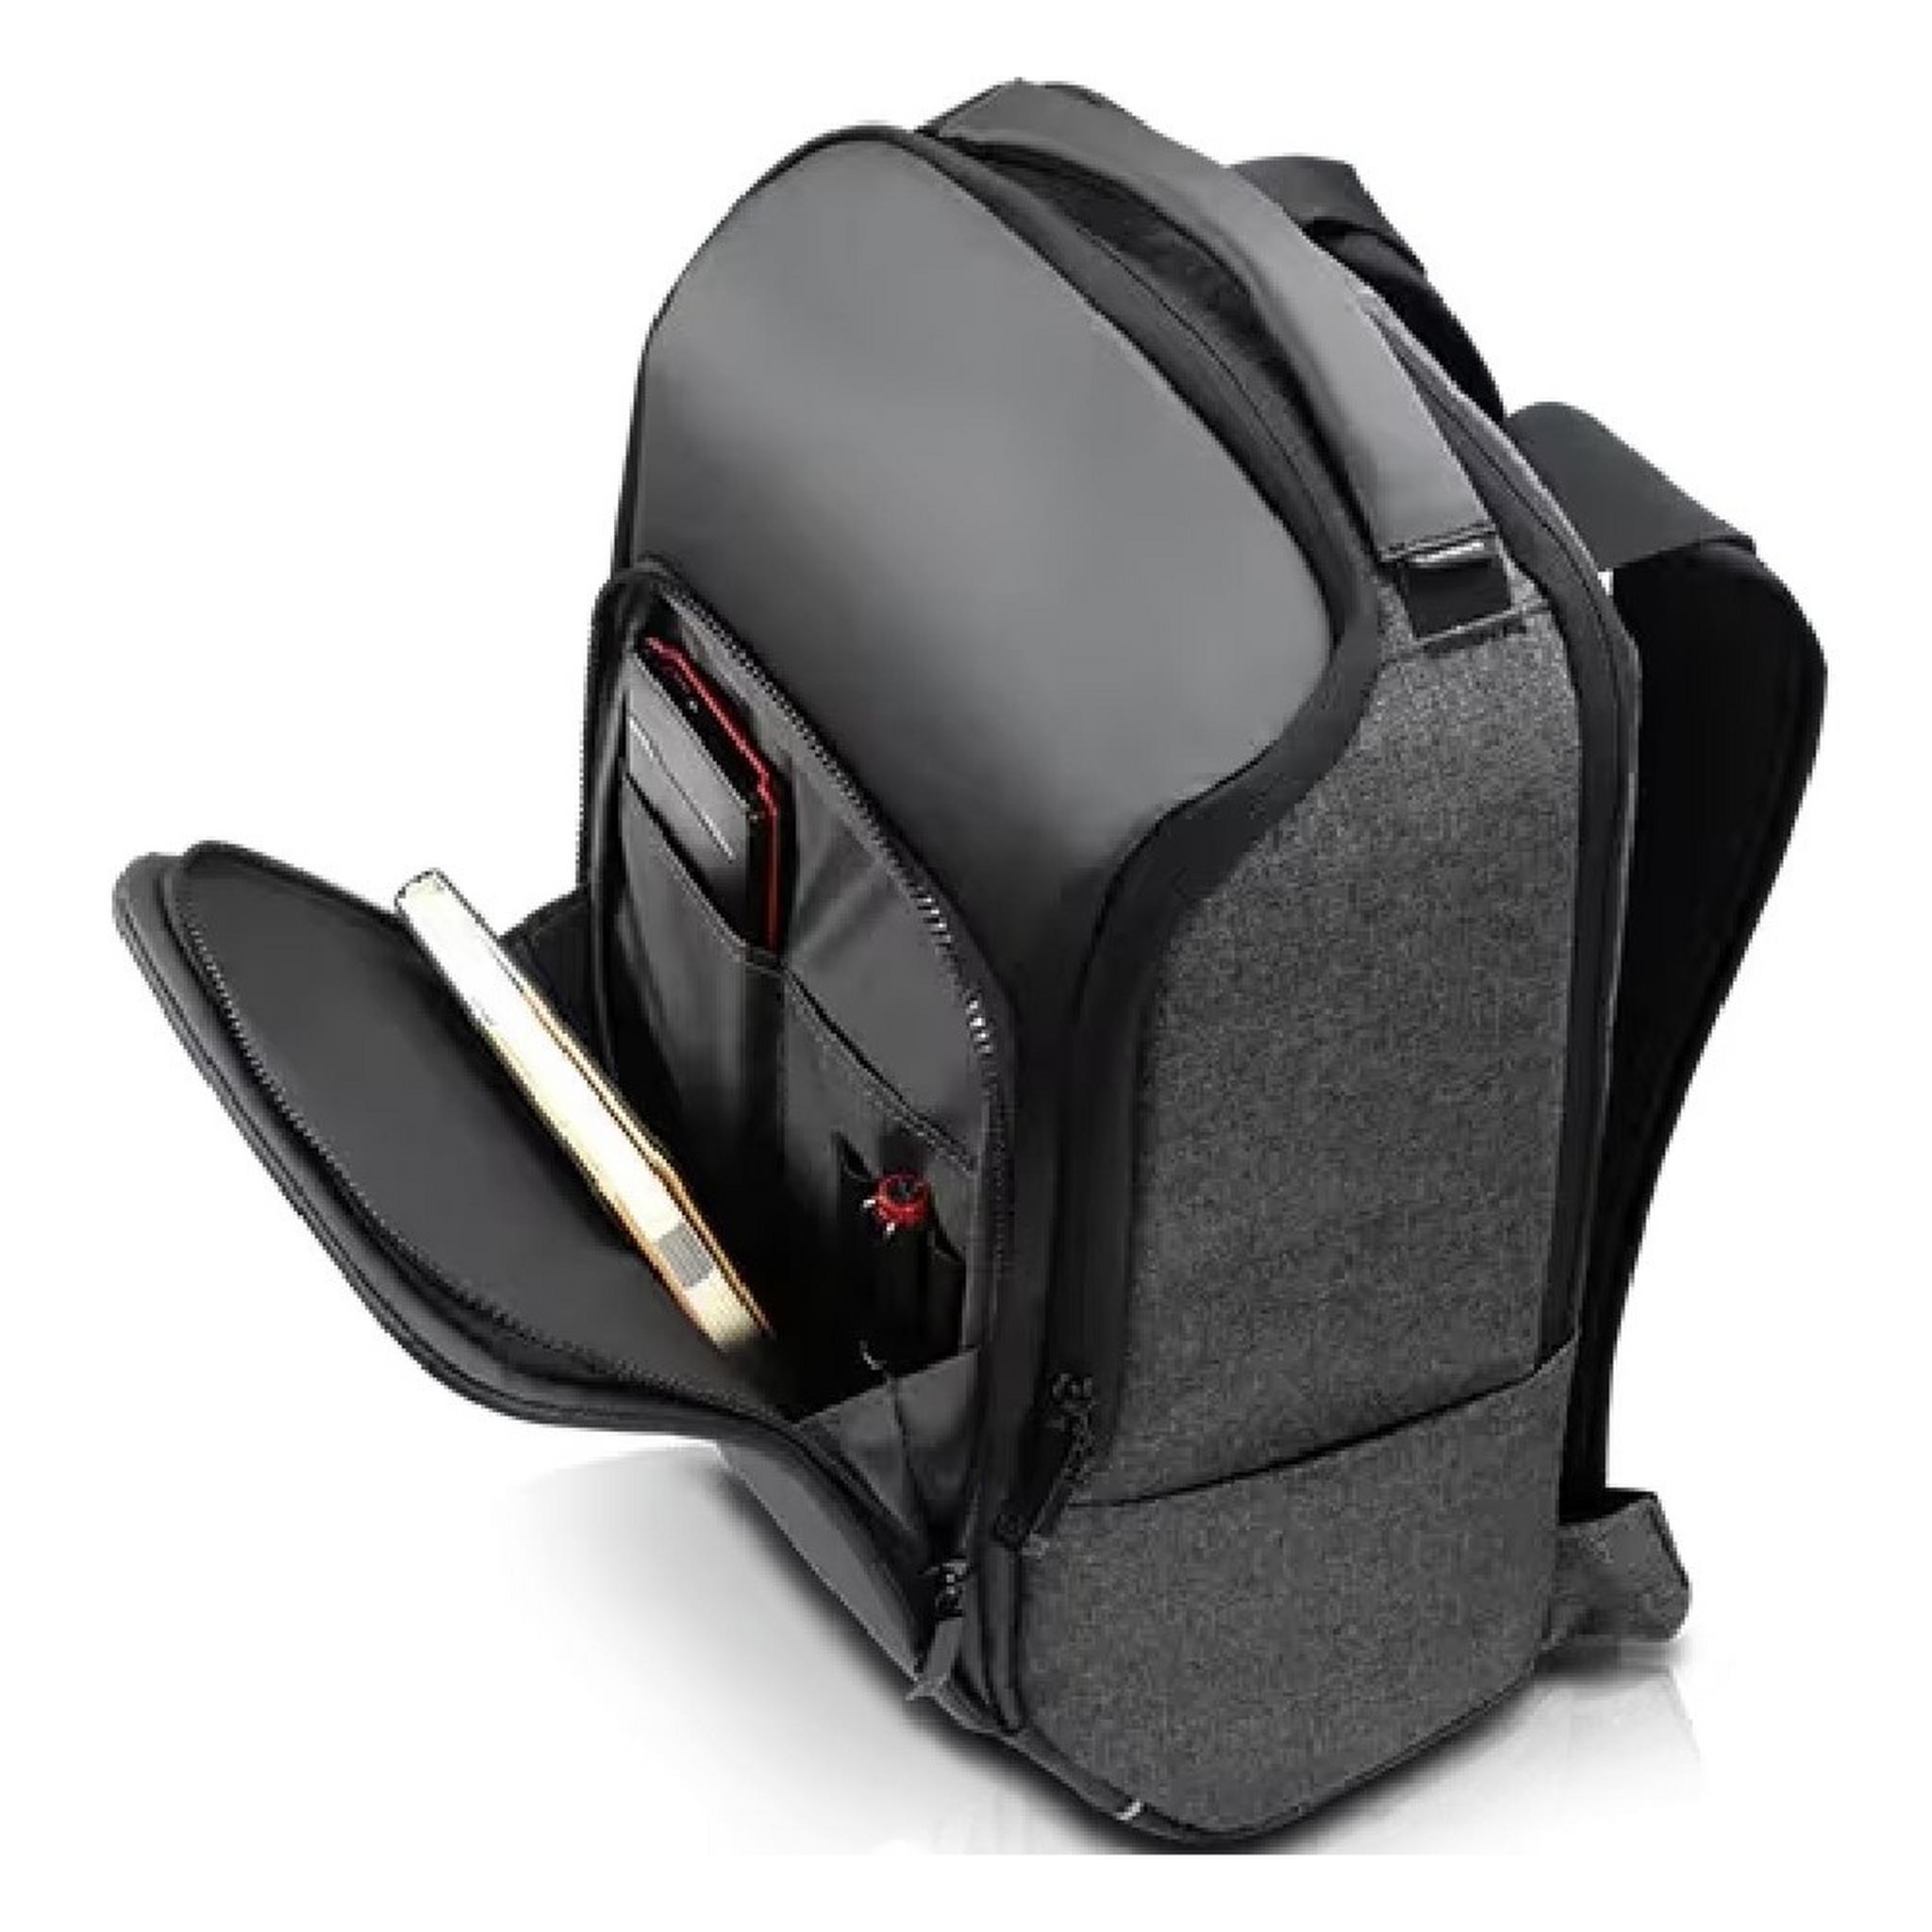 Lenovo Legion Recon Gaming Backpack, 15.6-inch, GX40S69333 – Black